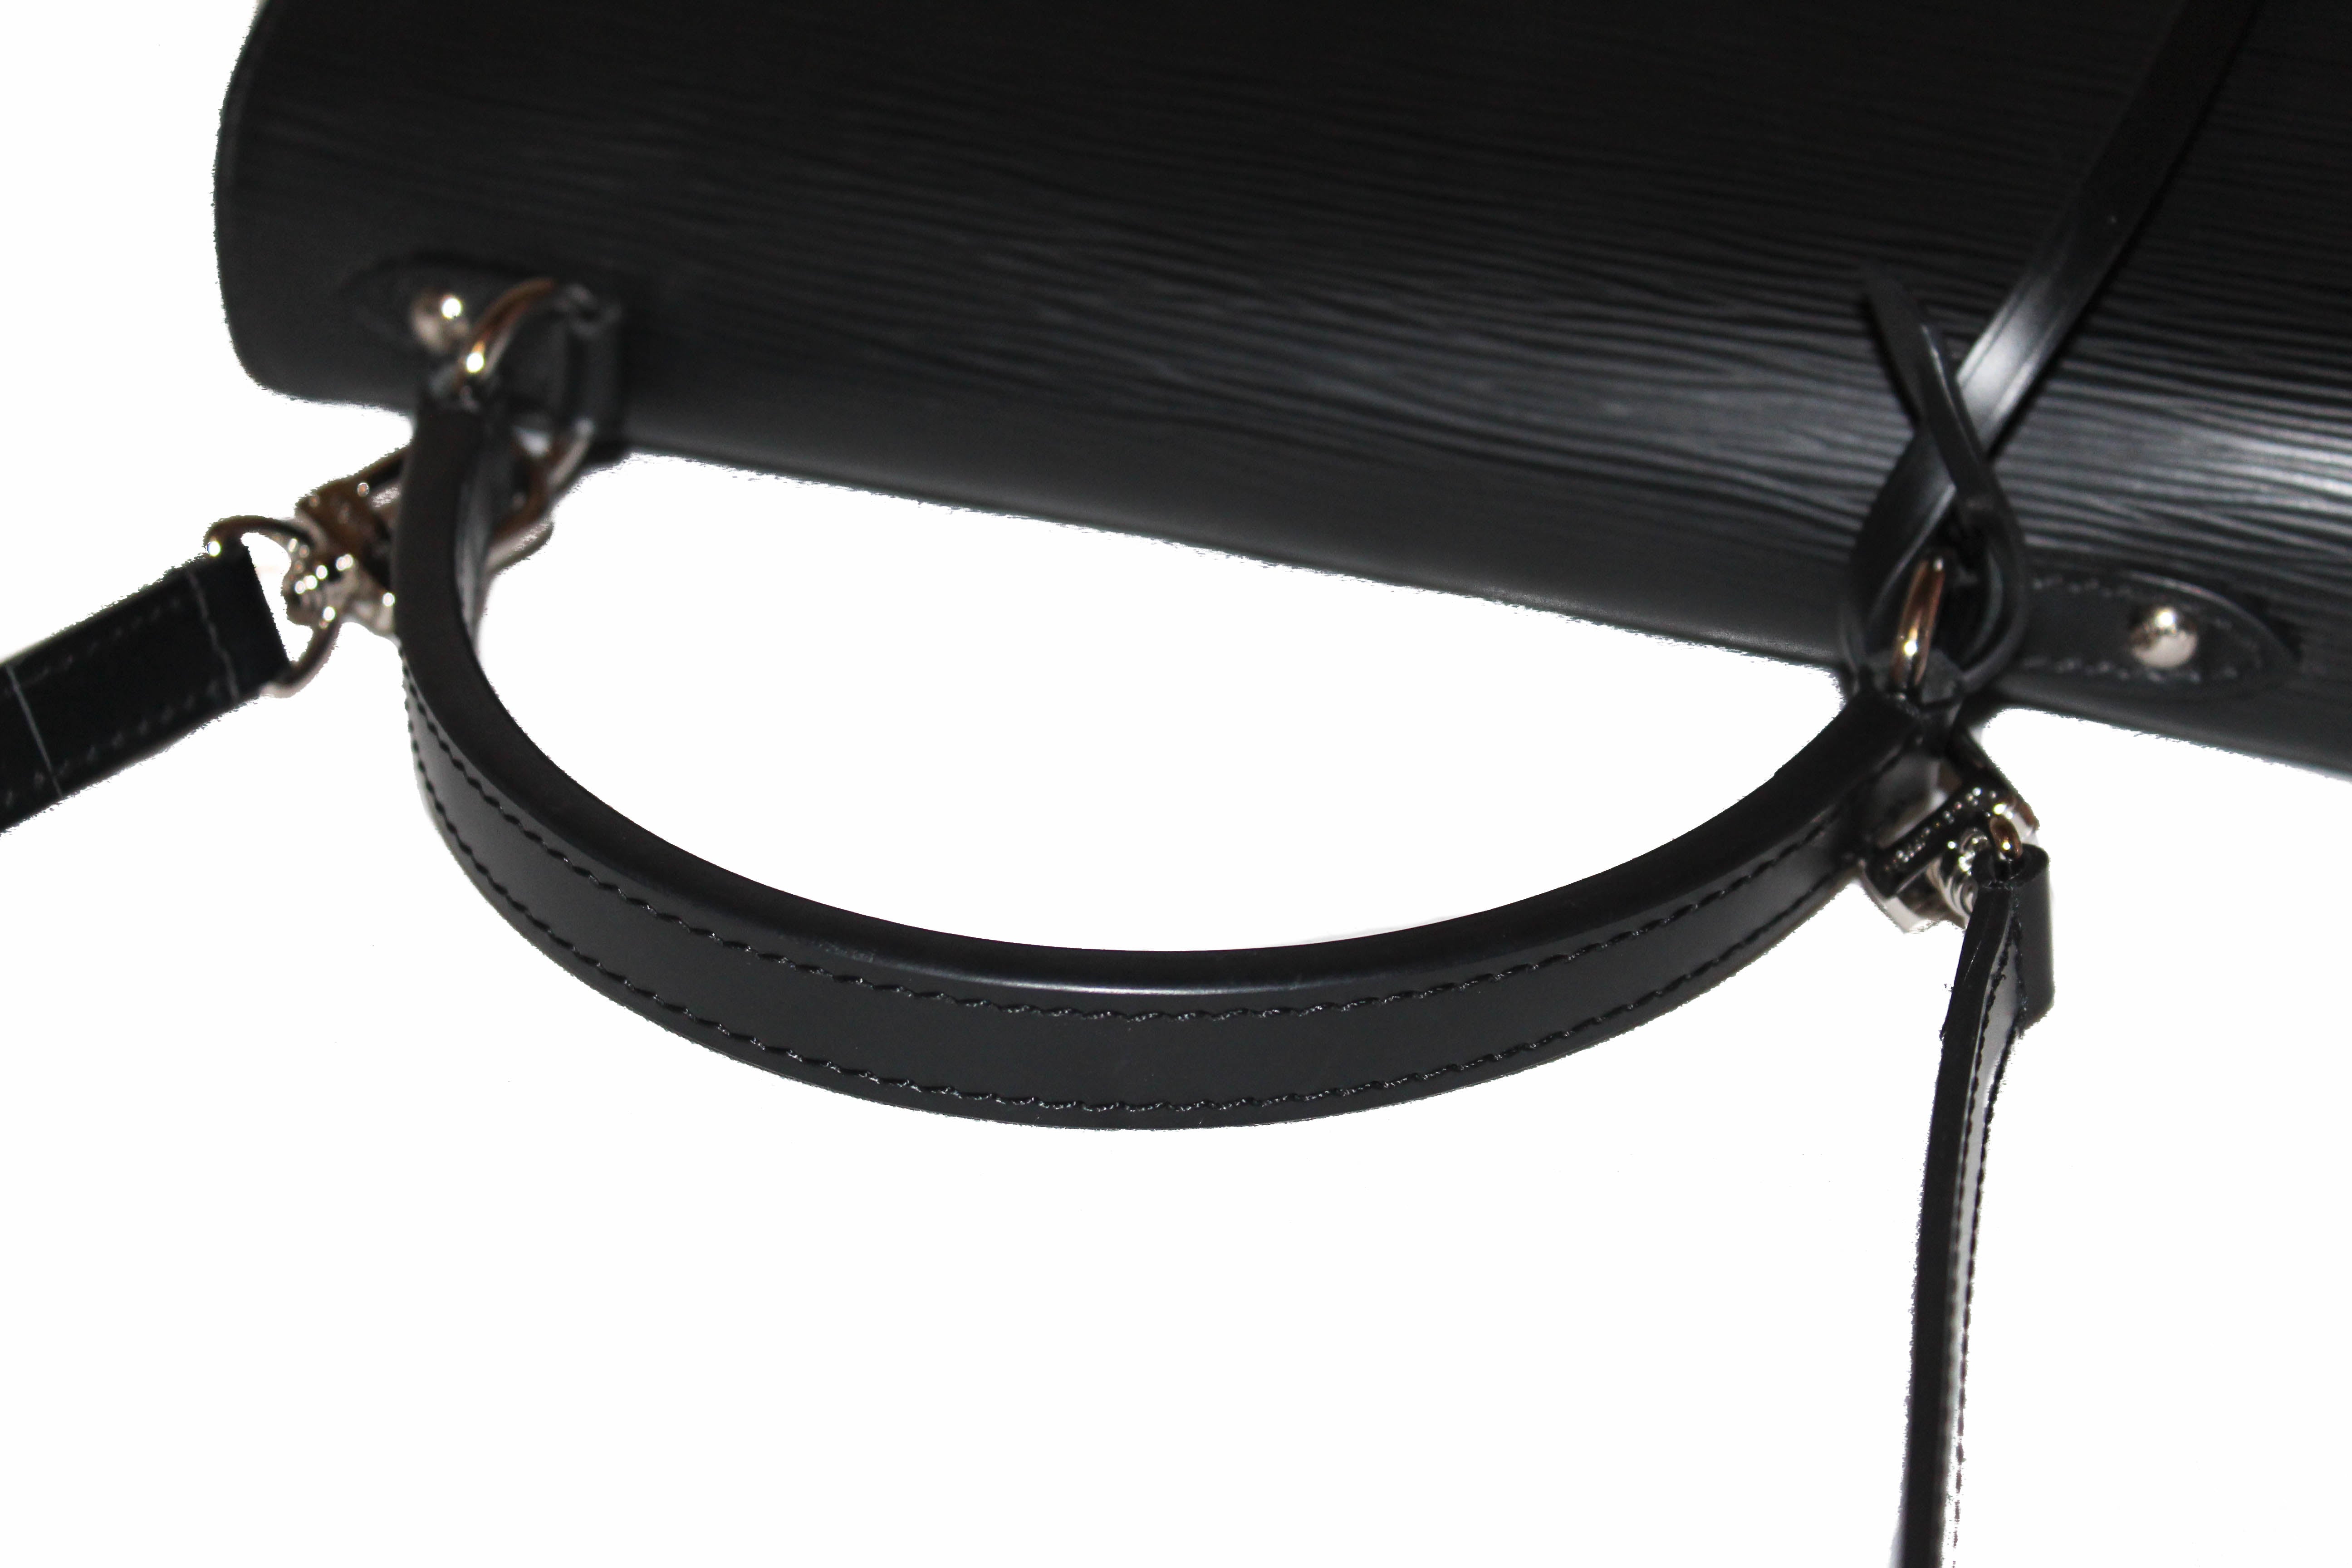 LOUIS VUITTON Cluny MM Epi Leather Shoulder Bag Black - Hot Deals